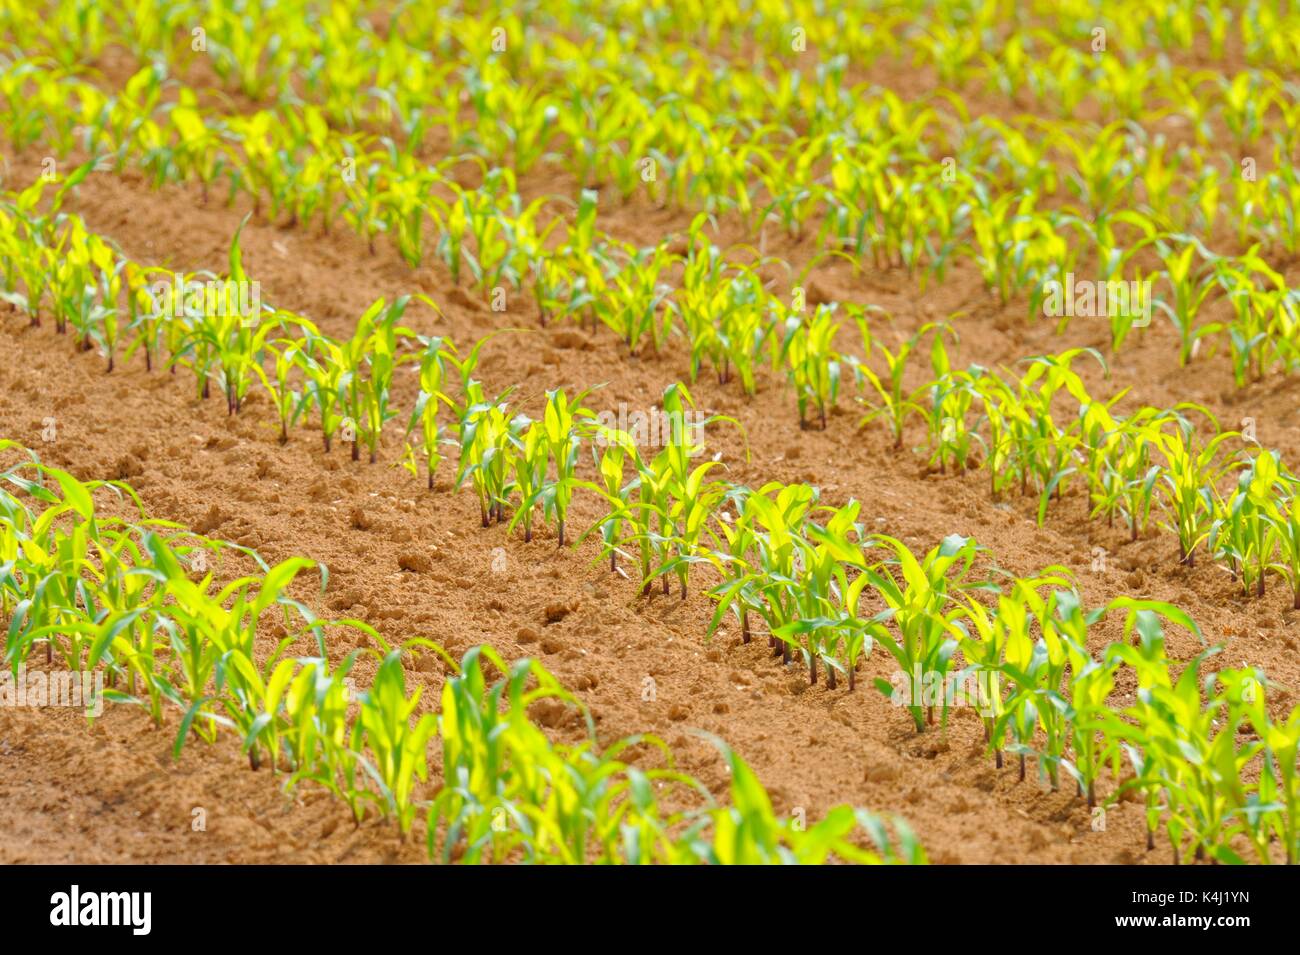 Small Corn plants (Zea mays) in rows on field, Baden-Württemberg, Germany Stock Photo